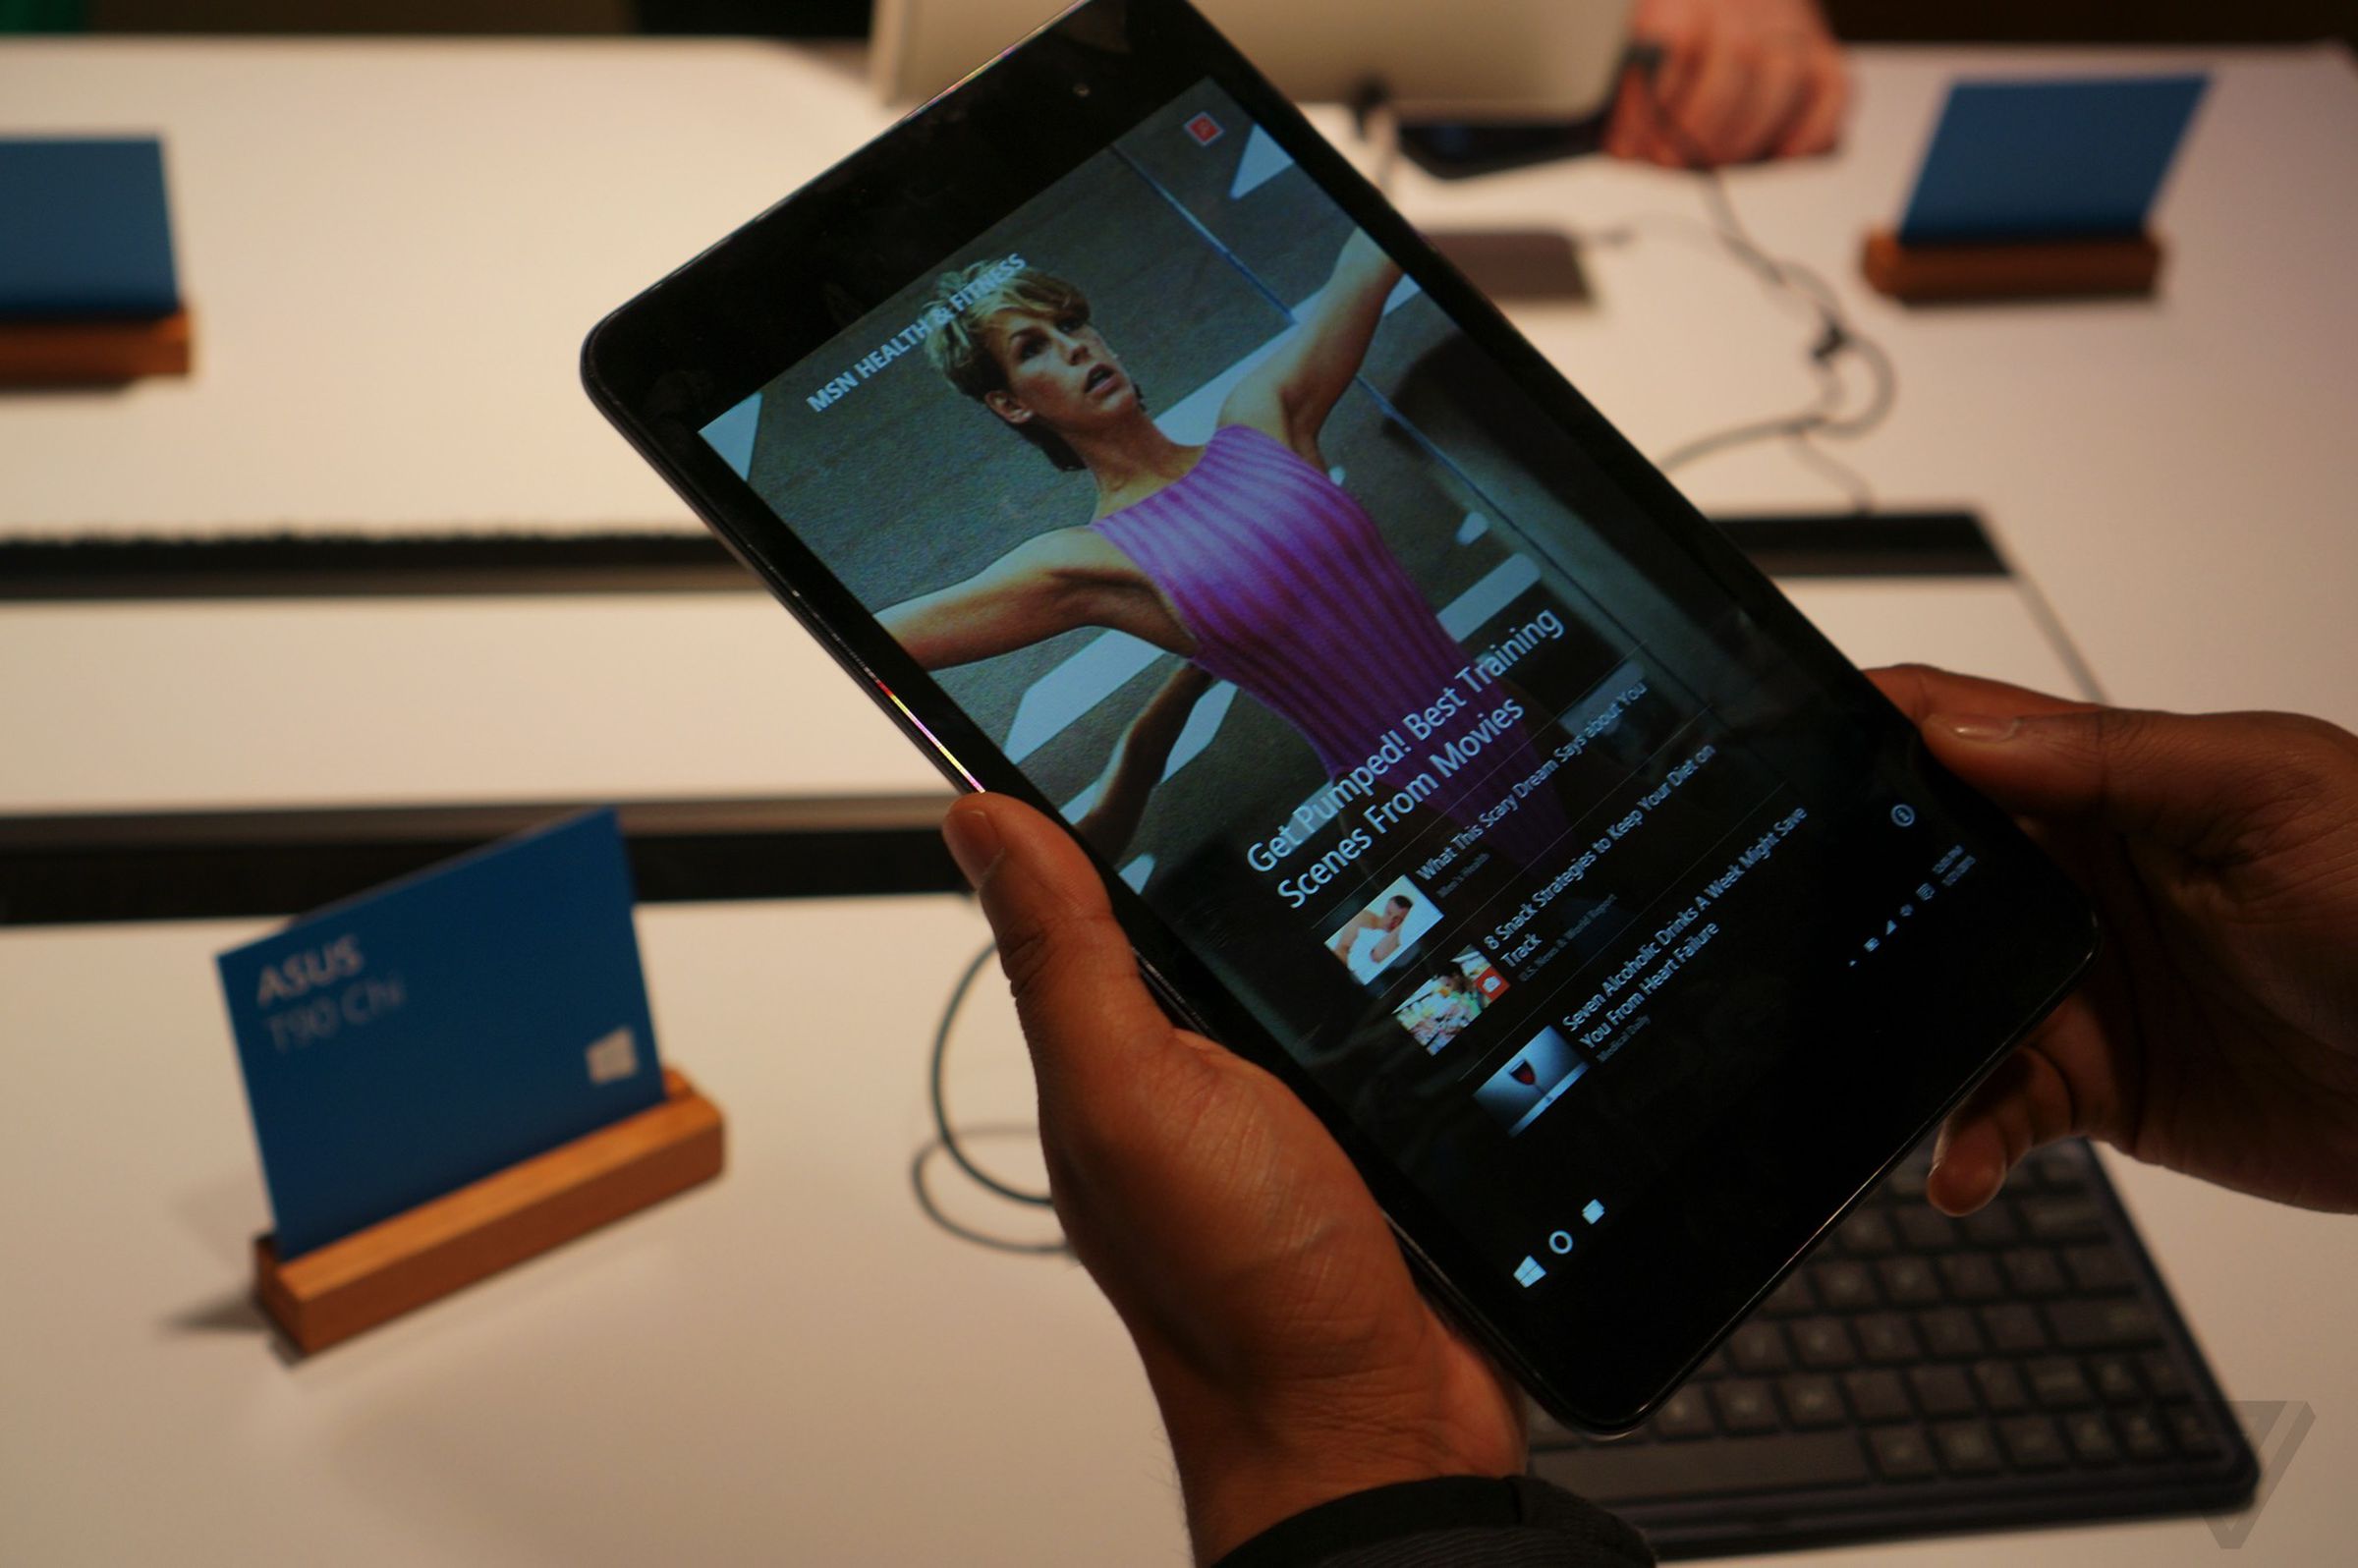 Windows 10 tablet hands-on photos